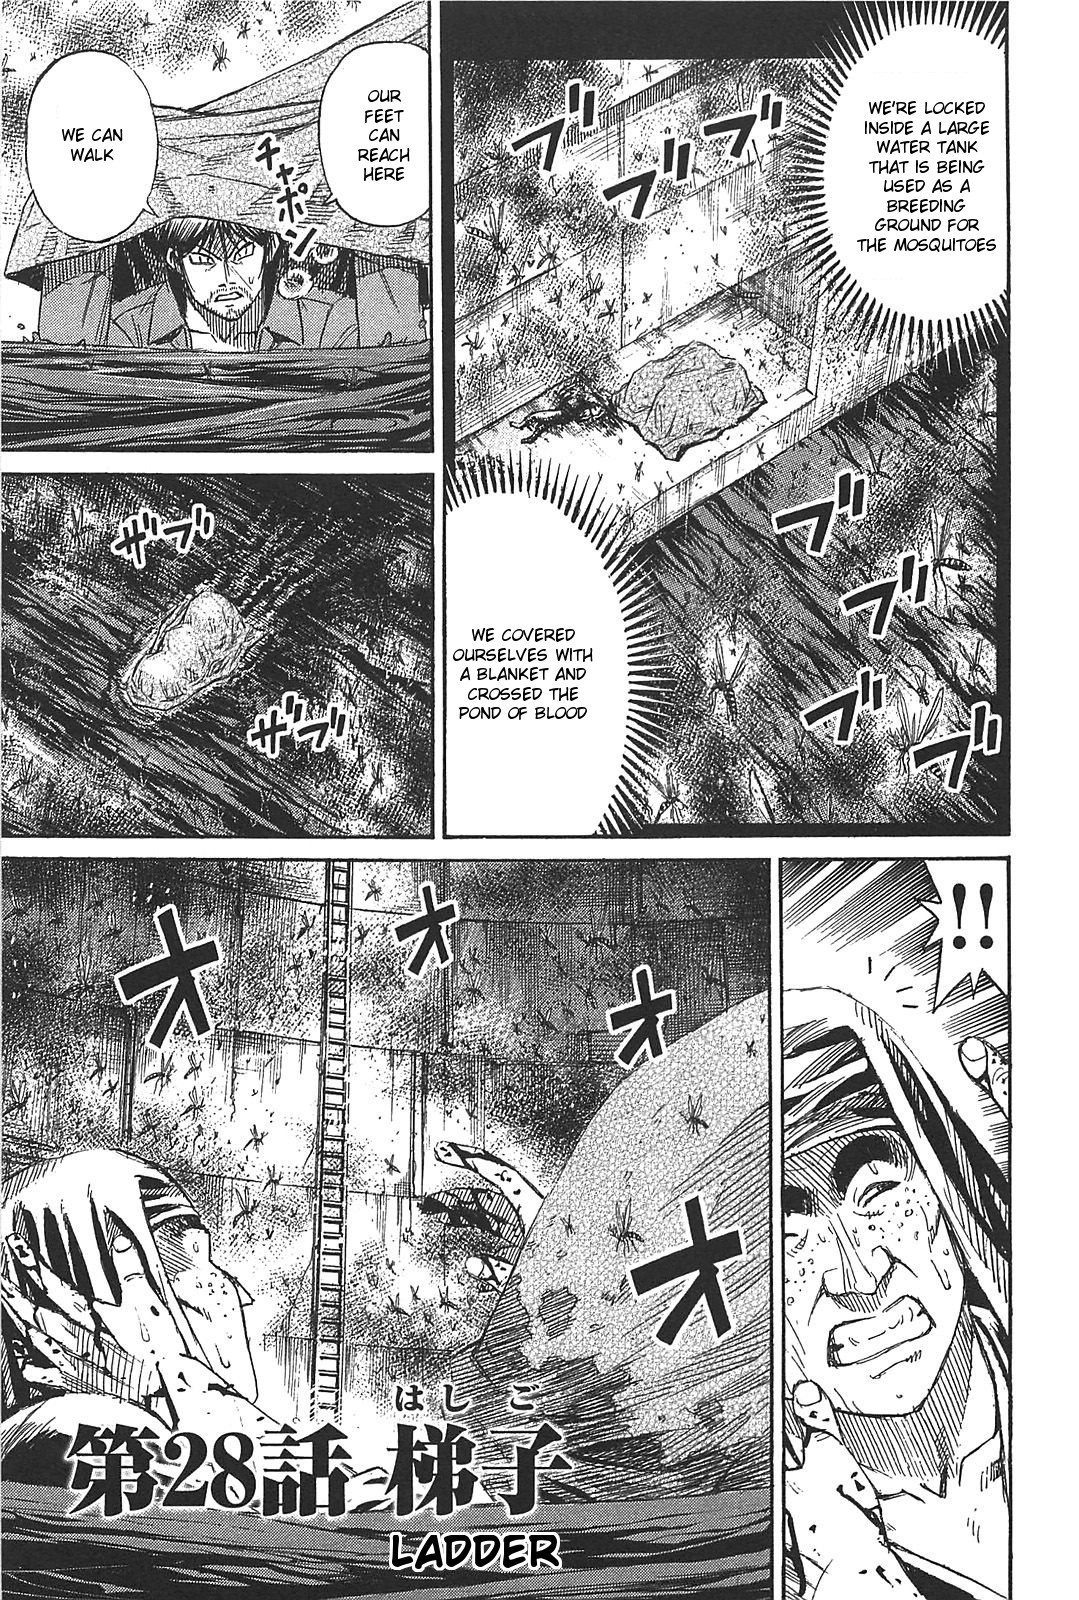 Higanjima - Last 47 Days Vol.3 Chapter 28